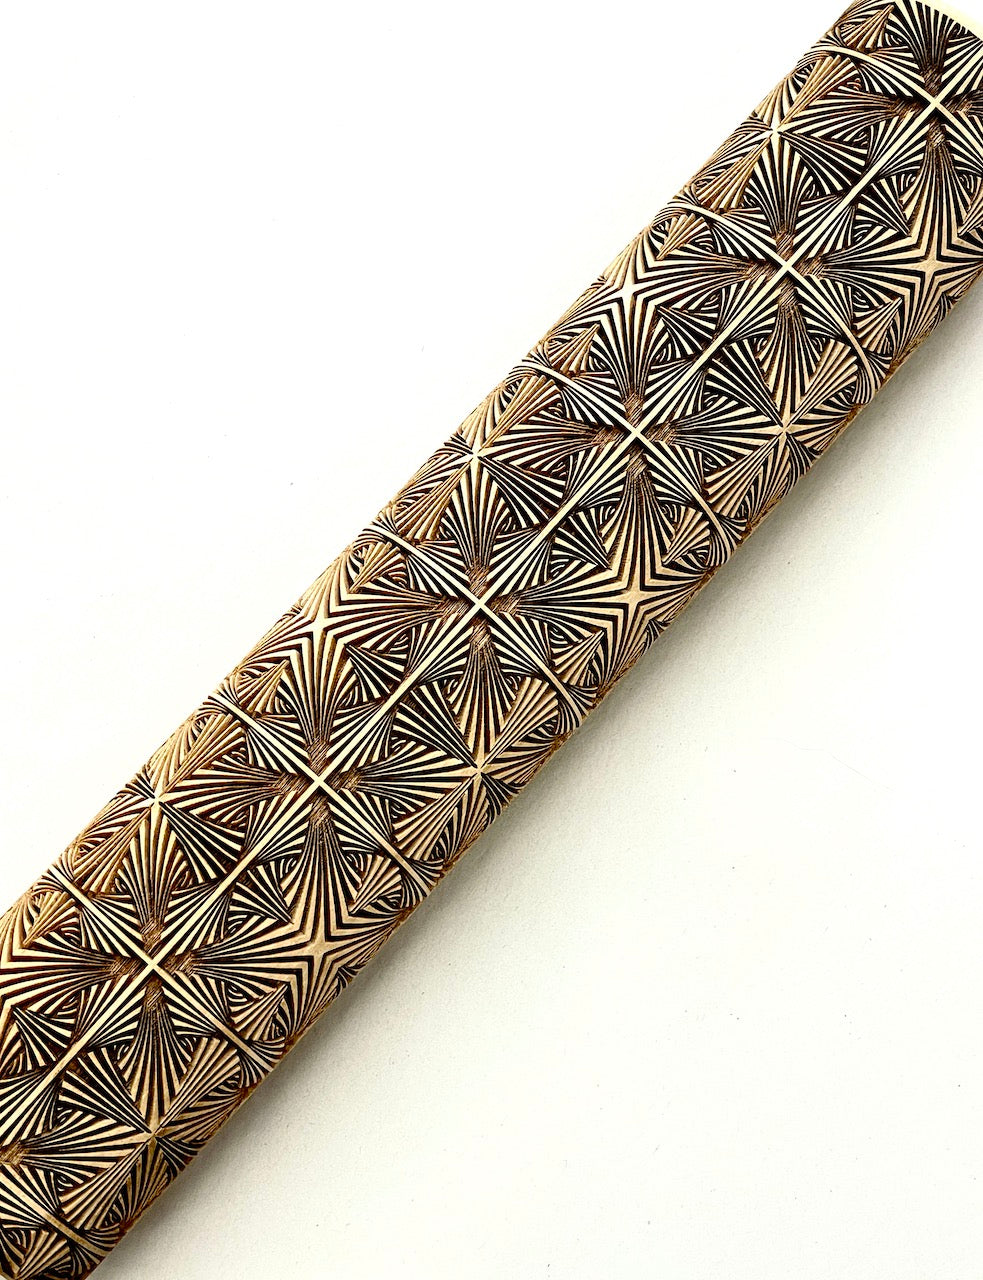 Kaleidoscope Textured Rolling Pin